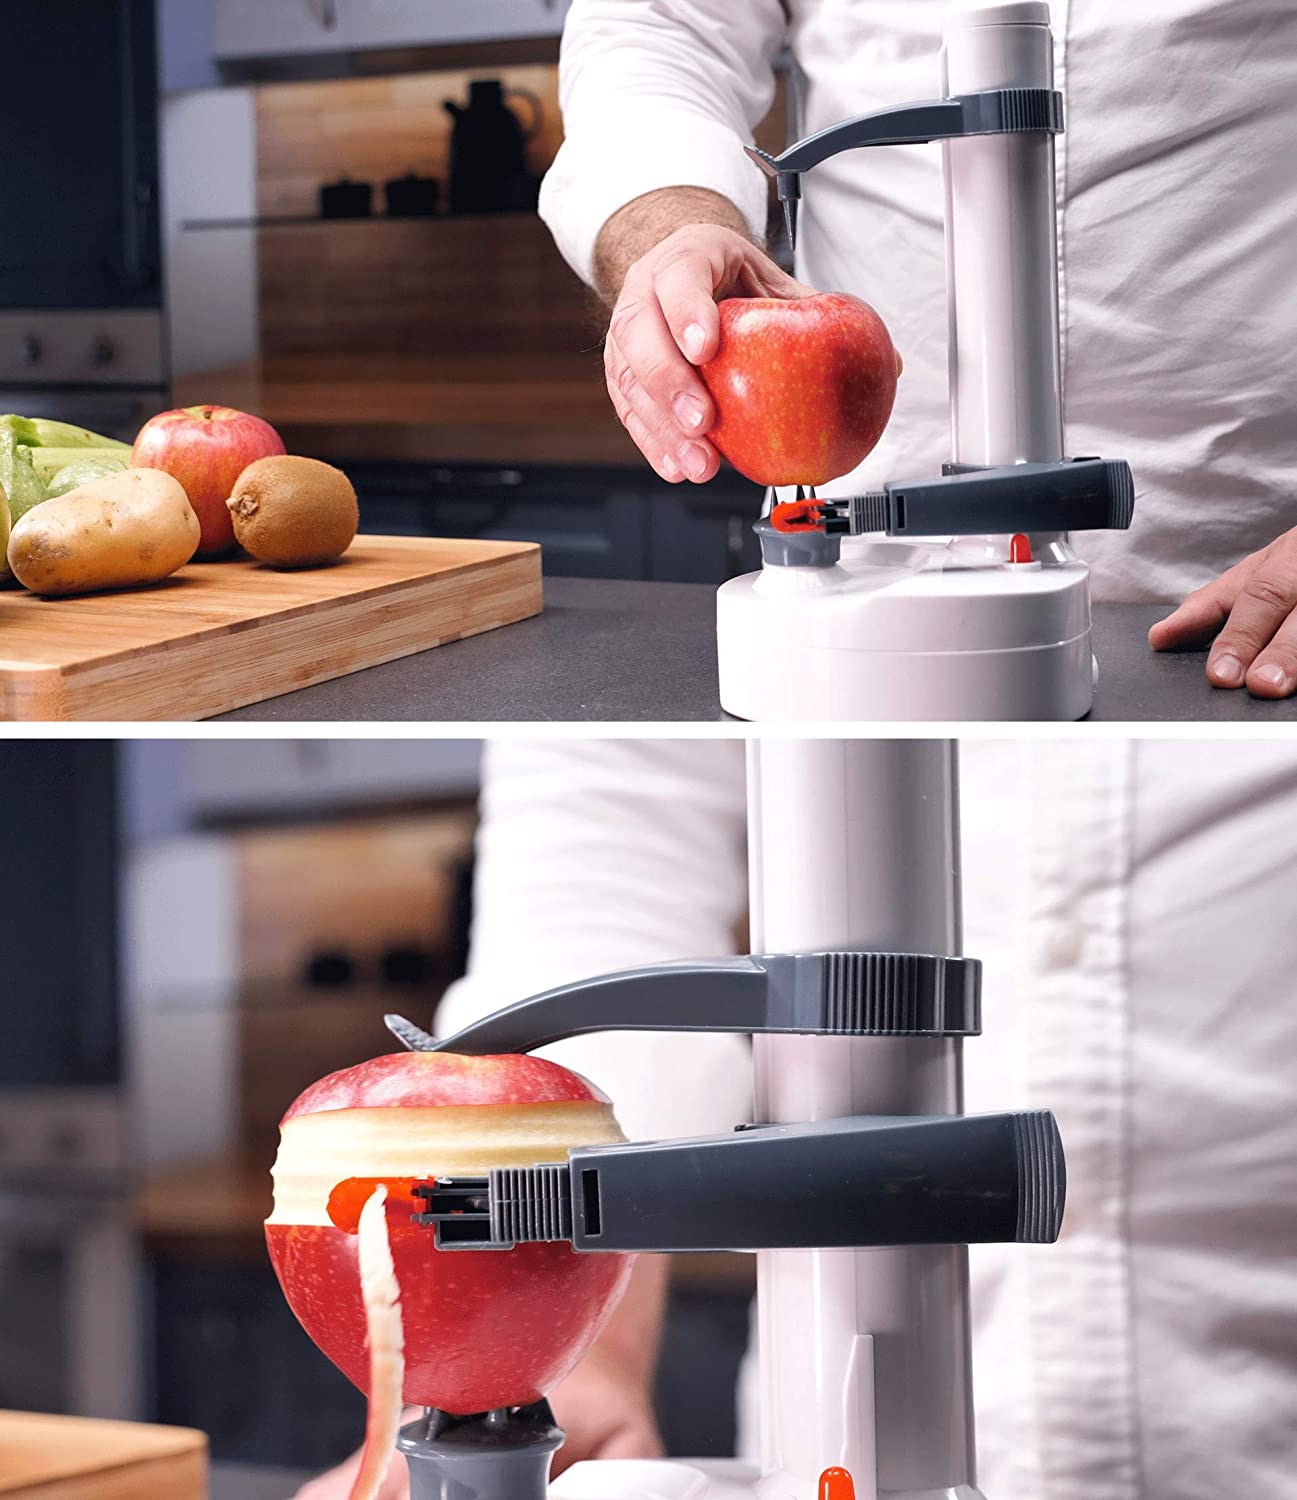 Electric Fruit Vegetable Peeling Machine Automatic Peeler Kitchen